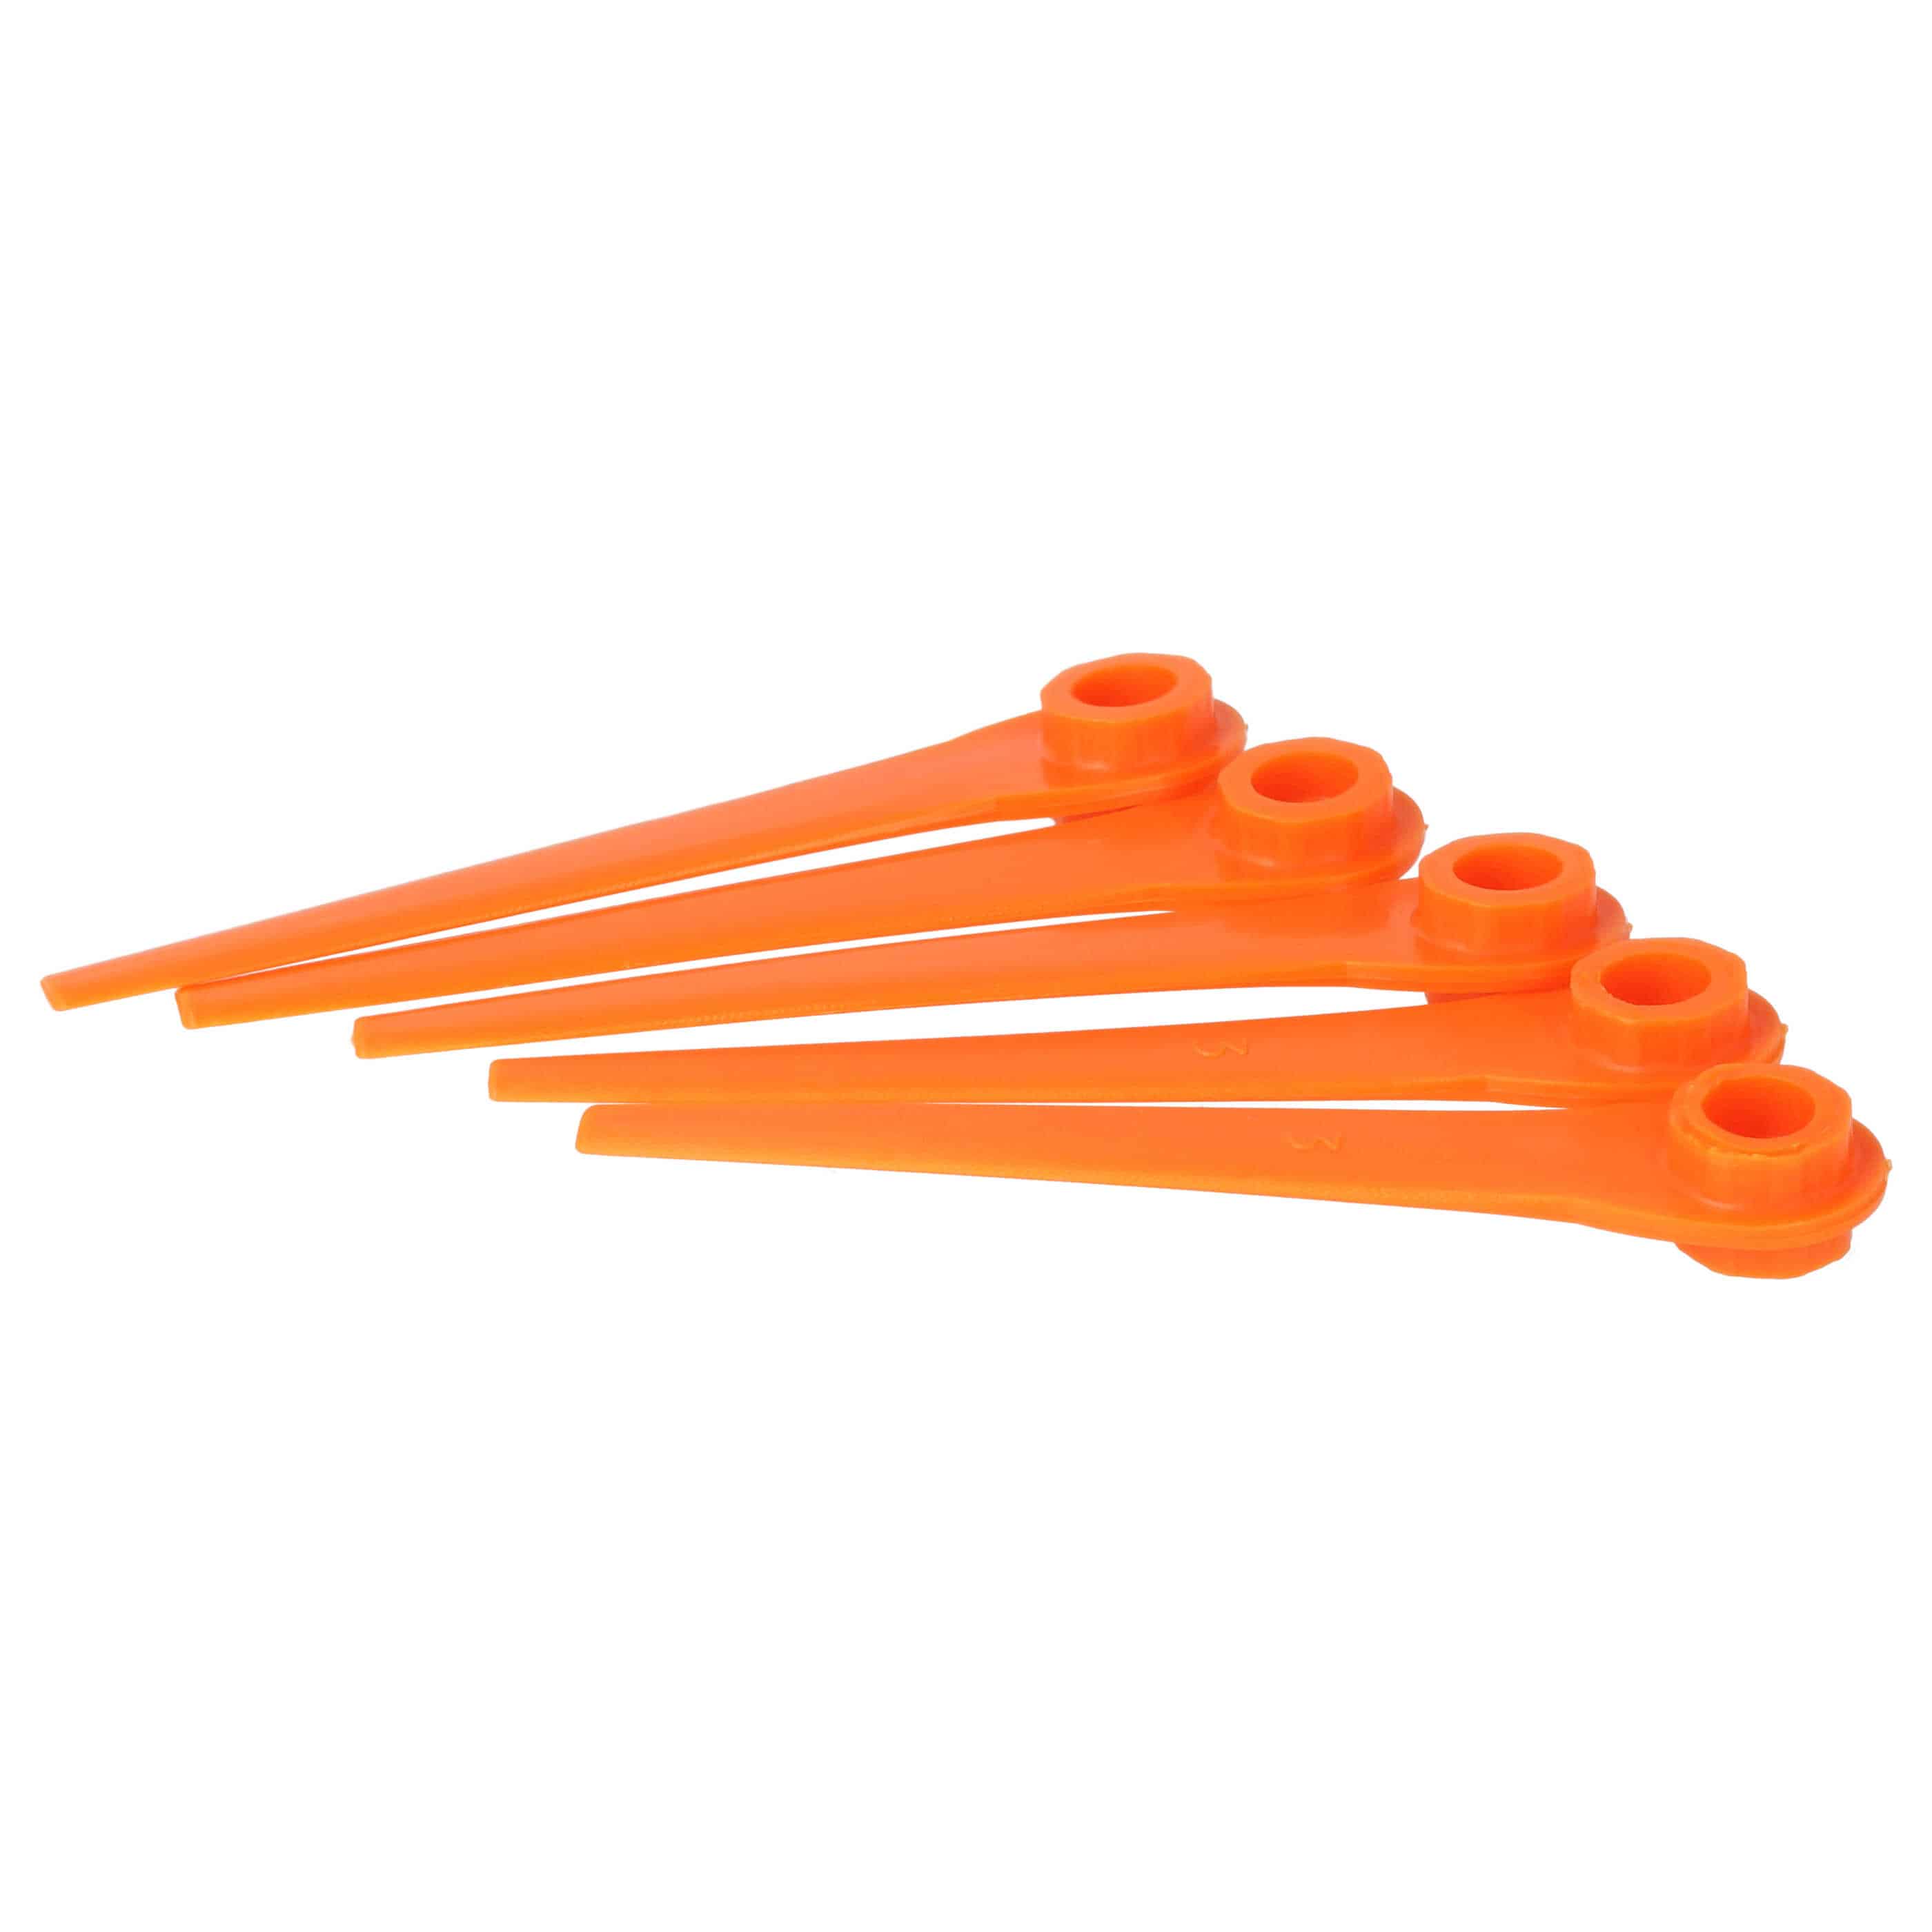 5x Cuchillas reemplaza Gardena RotorCut 5368-20 para cortacéspedes - naranja